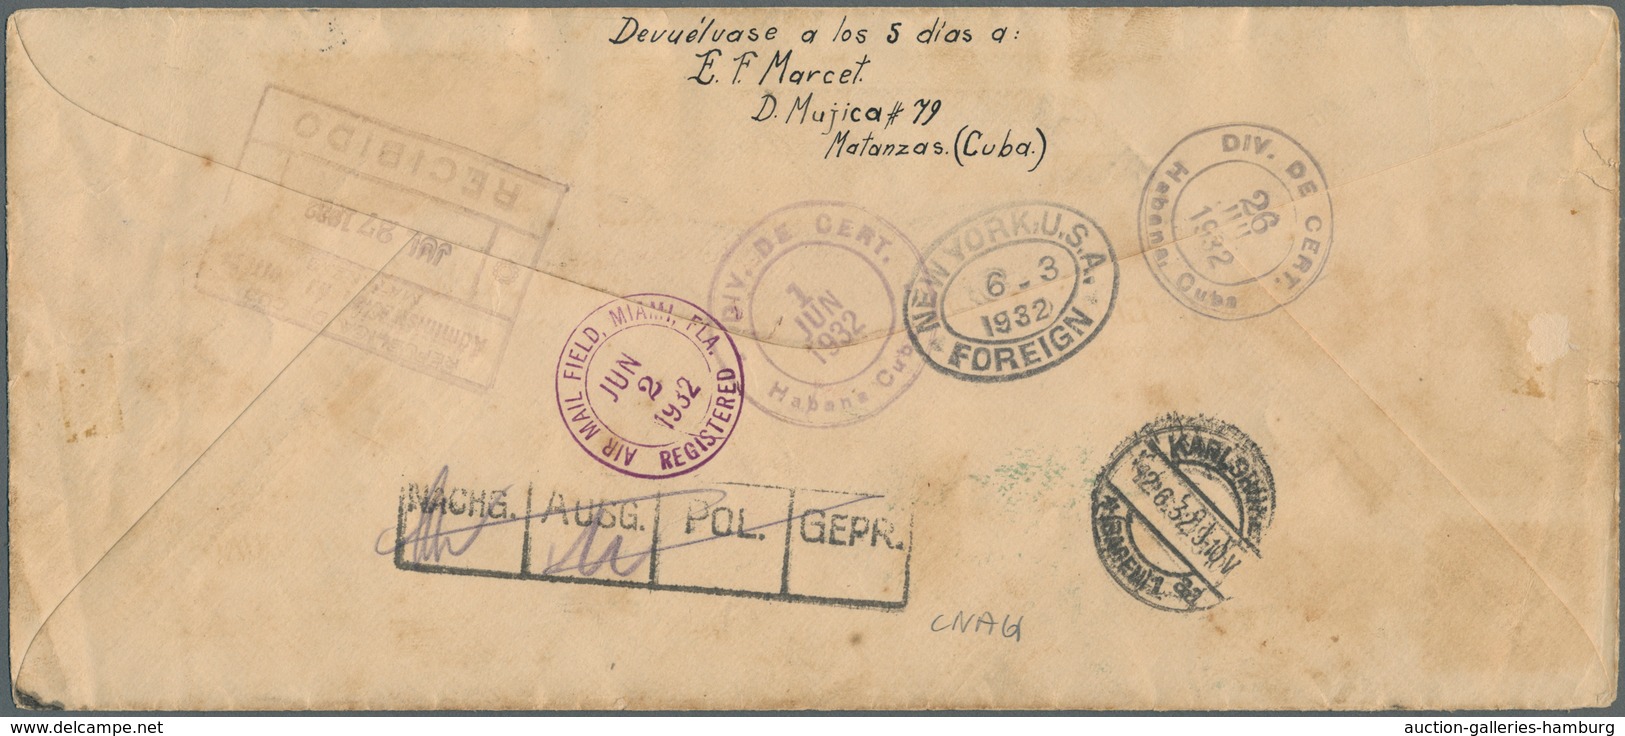 Katapult- / Schleuderflugpost: 1932, 31 May - 27 Jul, Catapult Flight Mail Cuba-Germany And Retour, - Luft- Und Zeppelinpost